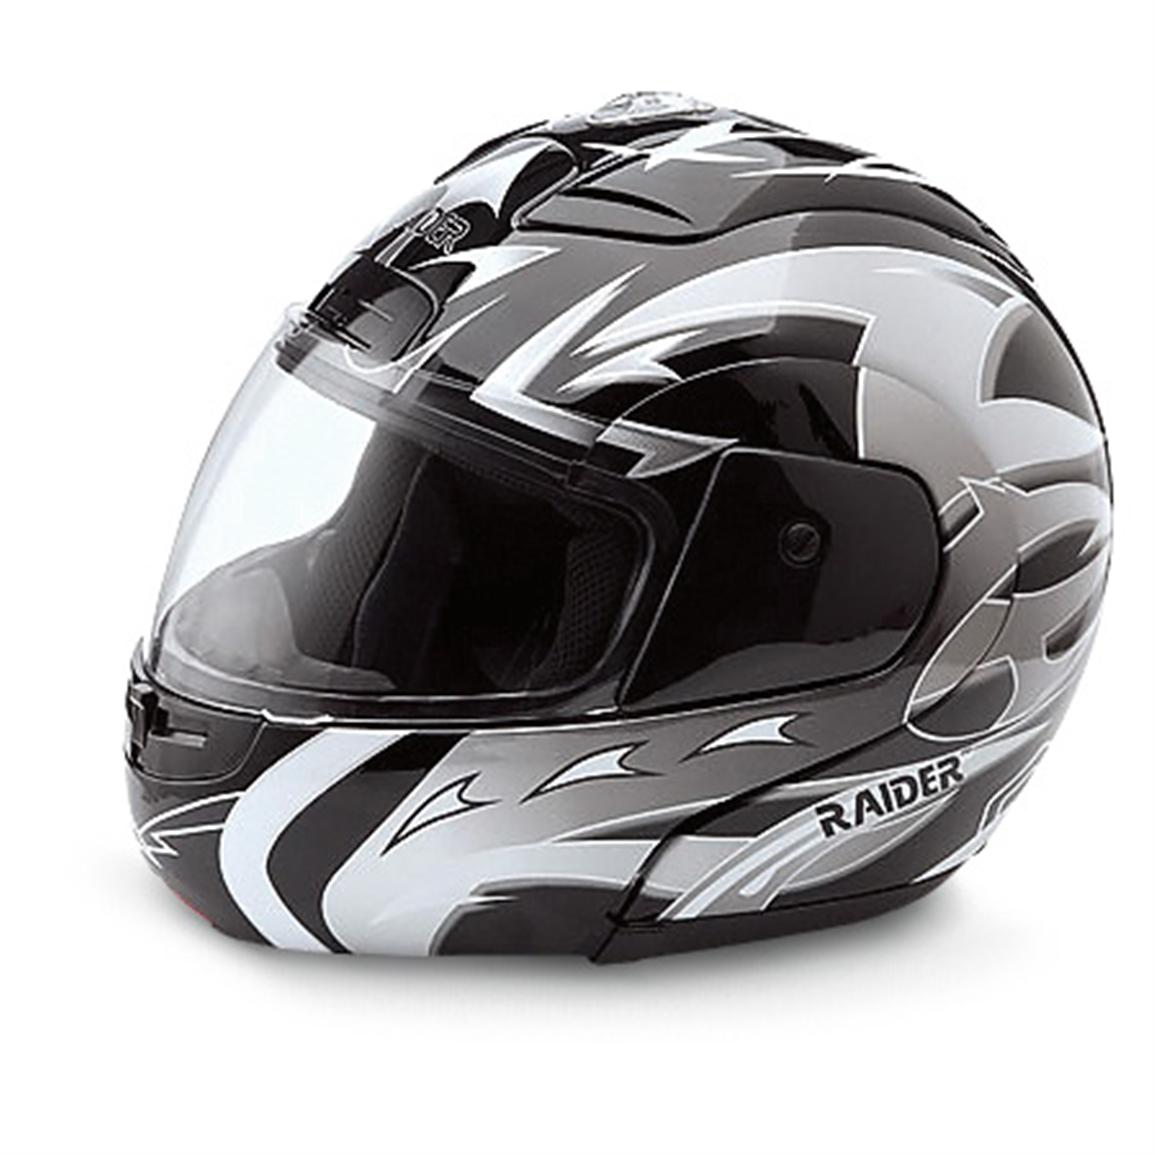 Raider™ Modular Motorcycle Helmet - 157722, Helmets & Goggles at Sportsman's Guide